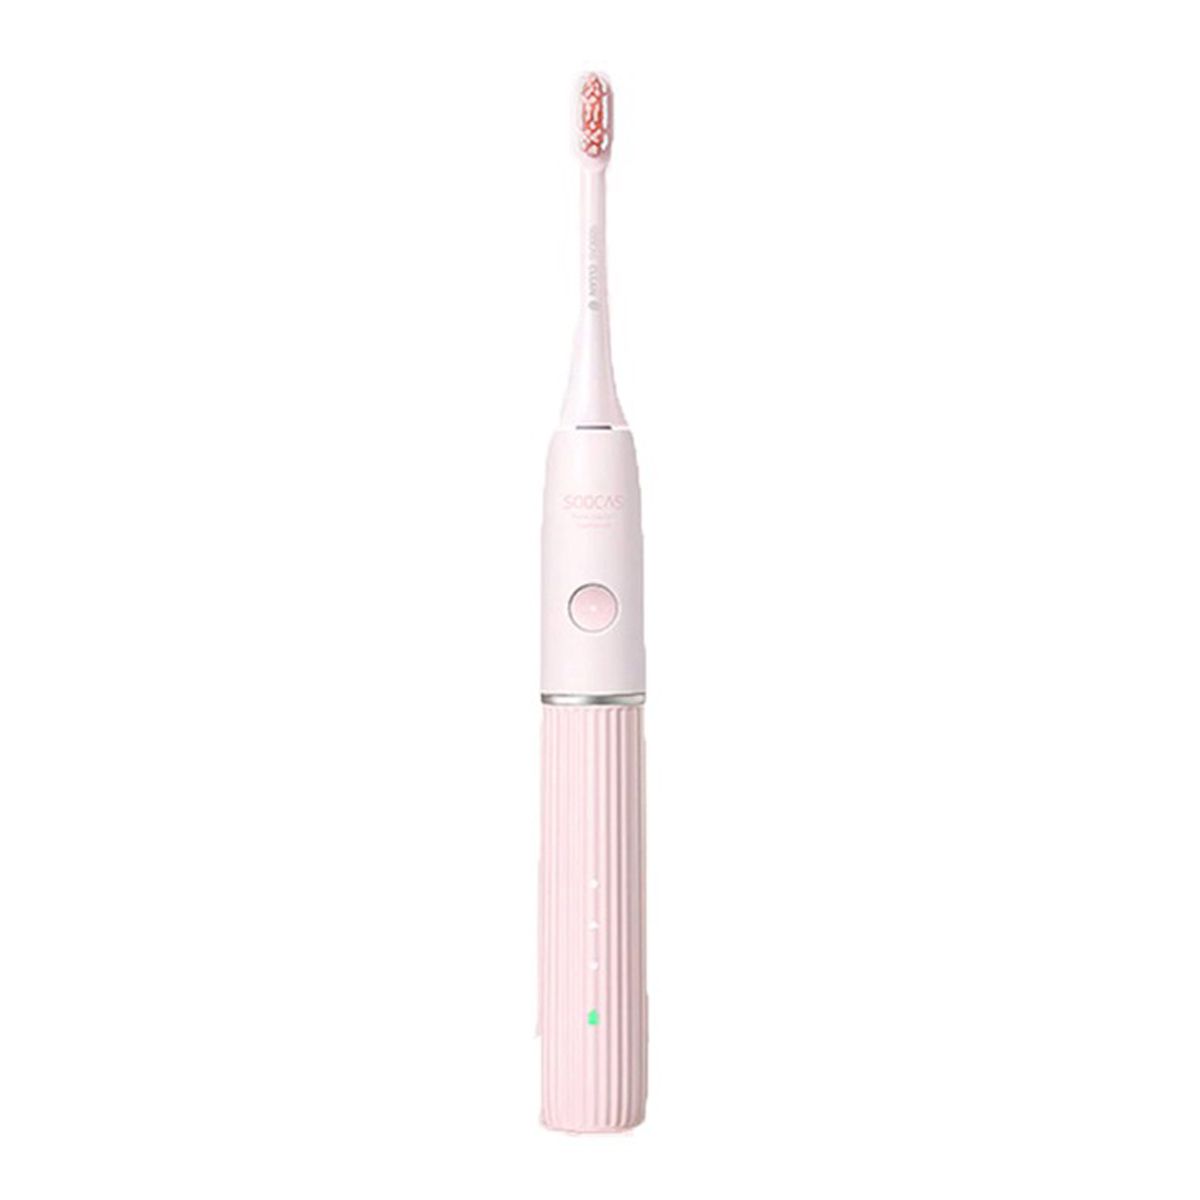 Soocas V2 Electric Toothbrush แปรงสีฟันโซนิคไฟฟ้า -Pink